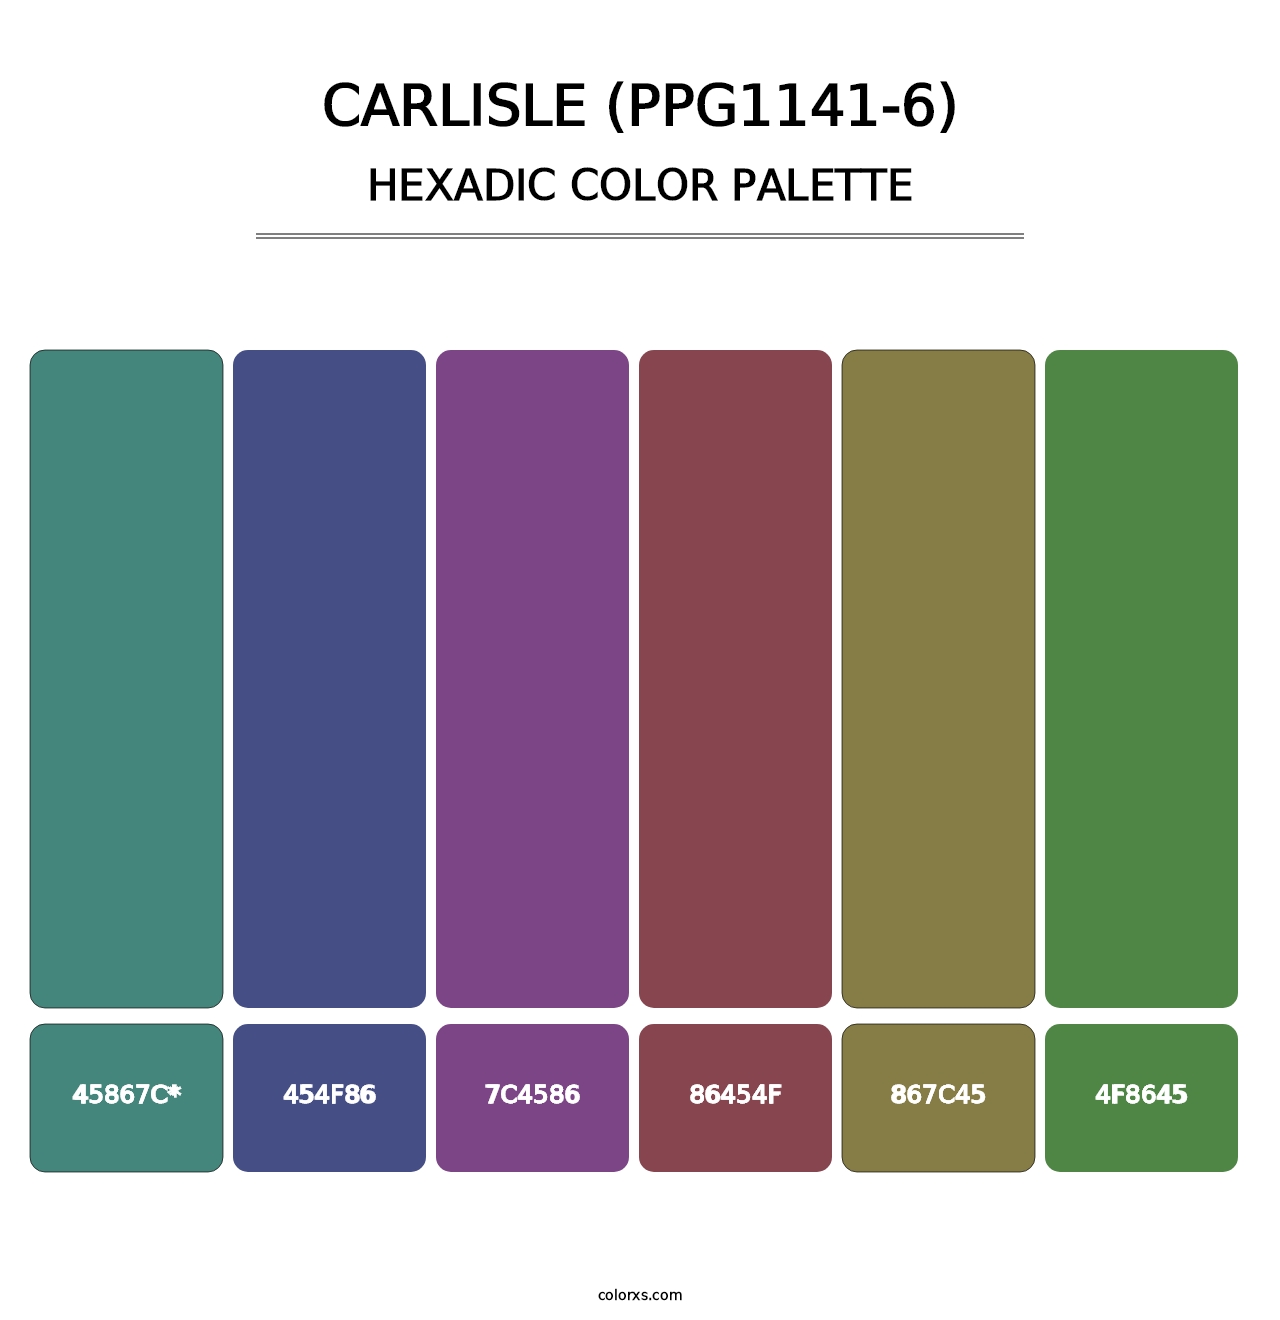 Carlisle (PPG1141-6) - Hexadic Color Palette